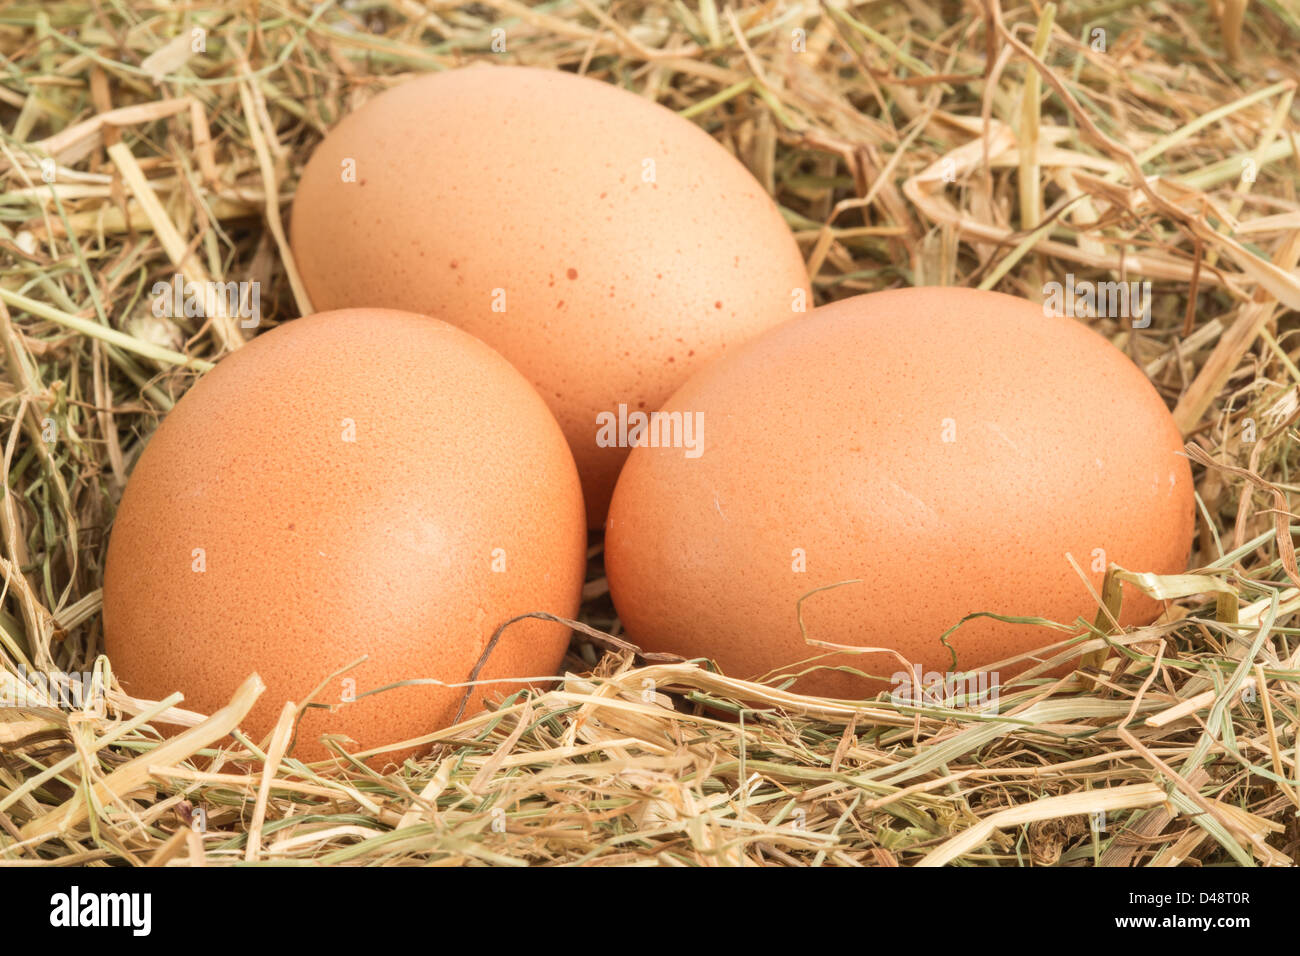 Three eggs nestled in straw Stock Photo